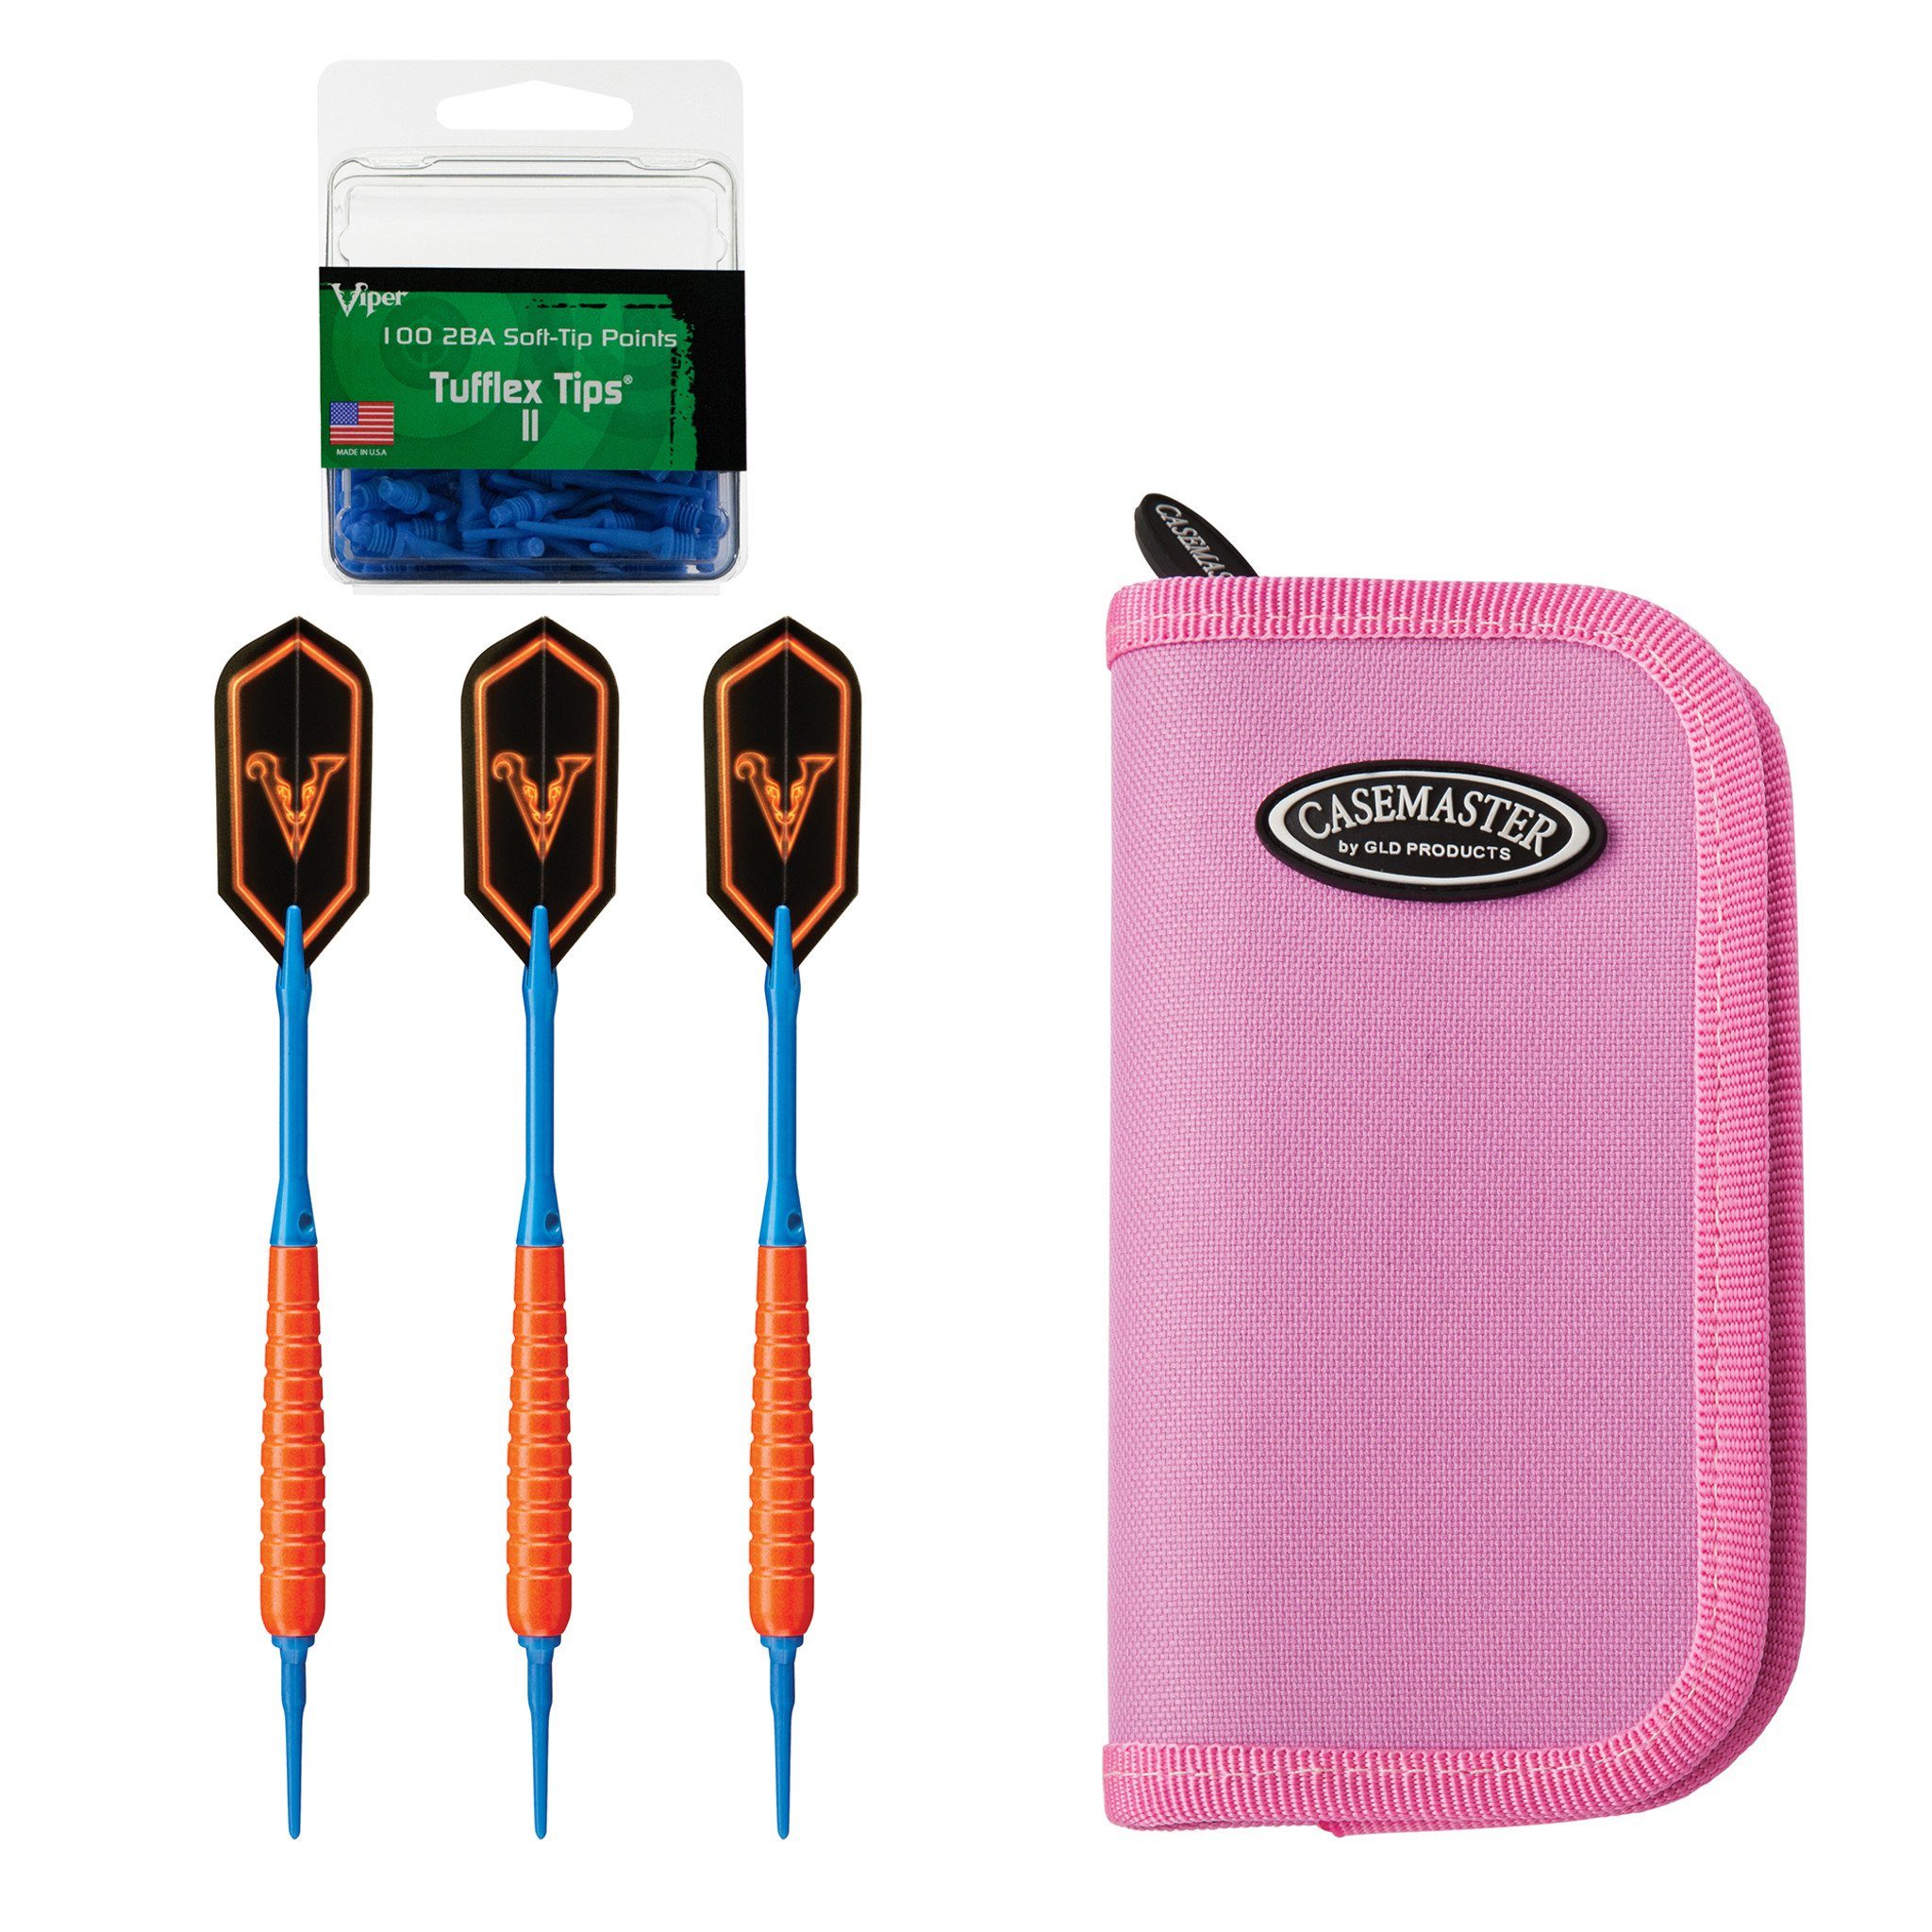 Viper V Glo Soft Tip 18gm Orange, Casemaster Deluxe Pink Nylon Case, and 2BA Tufflex Tips II- Blue 100ct. Box